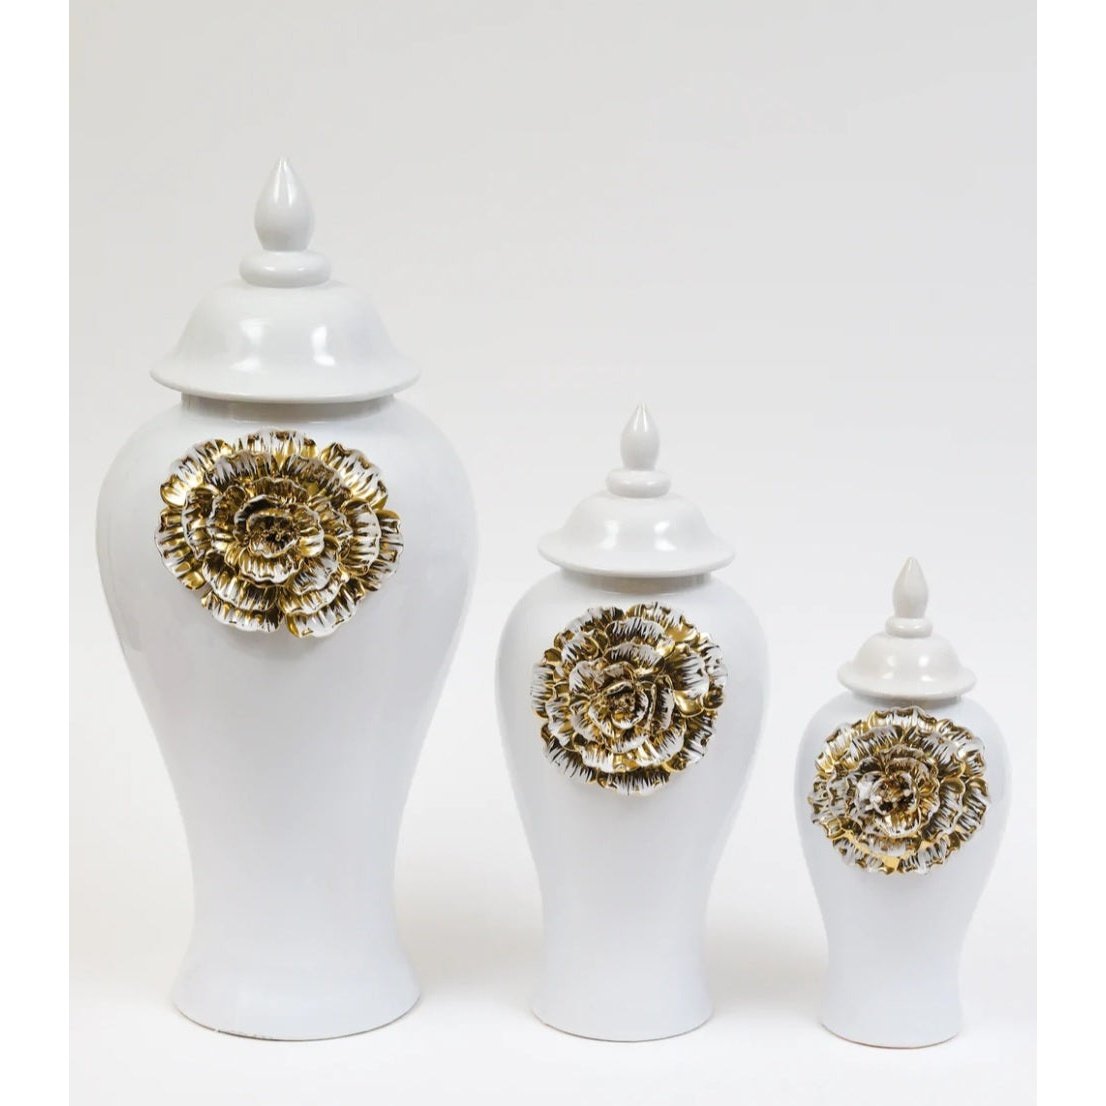 White Ginger Jar w/Gold Flower Design - Exquisite Designs Home Décor 